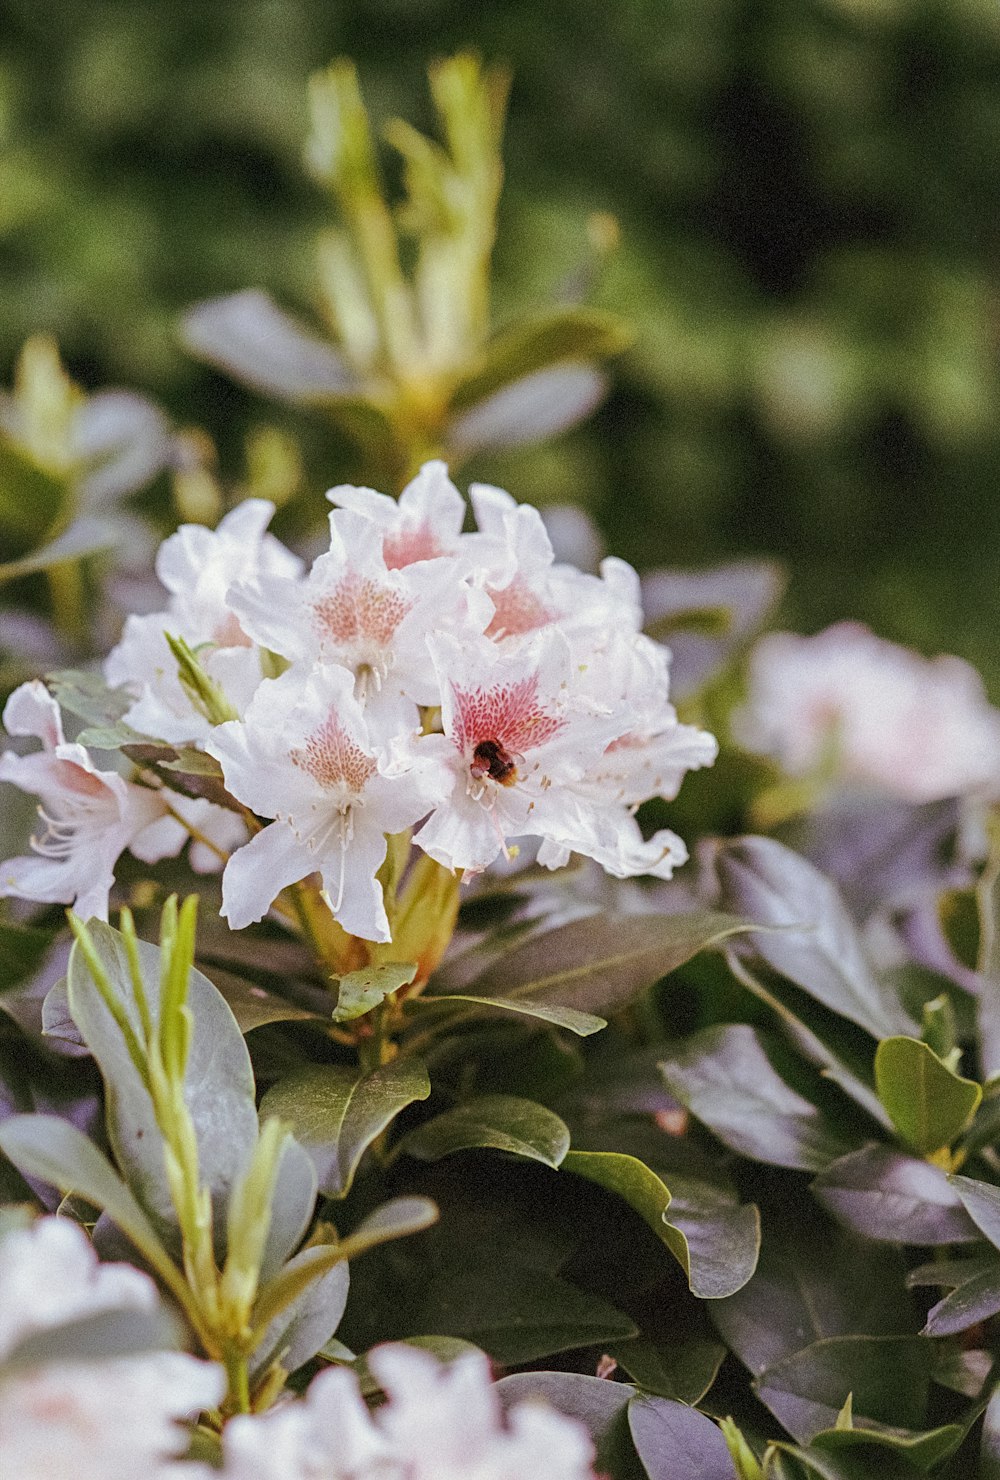 a close up of a flower on a bush